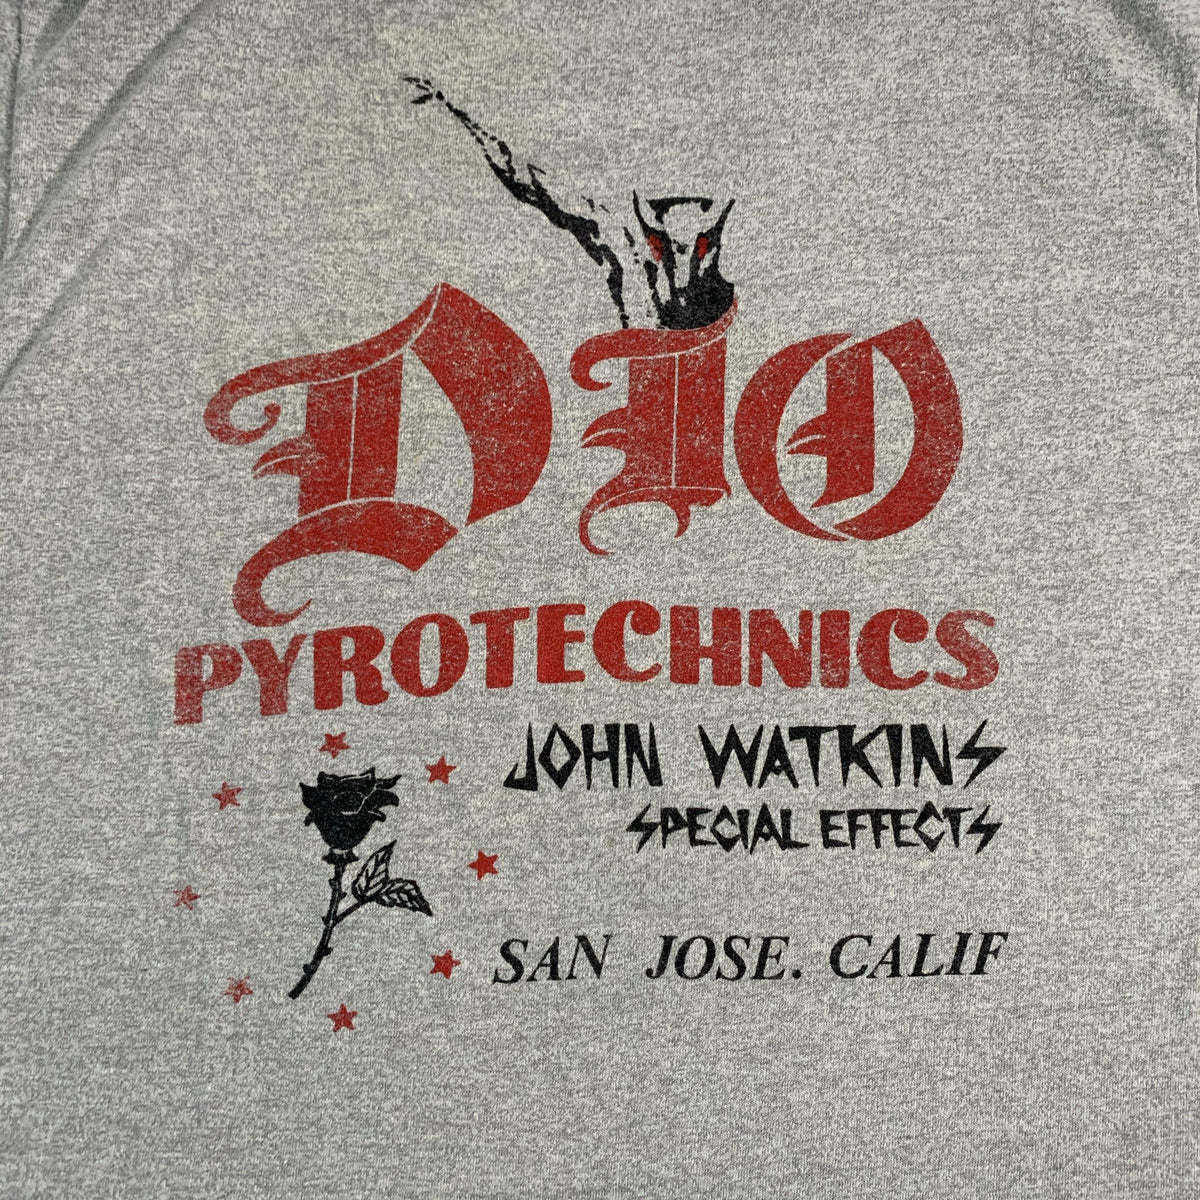 Vintage Dio “Pyrotechnics” T-Shirt - jointcustodydc